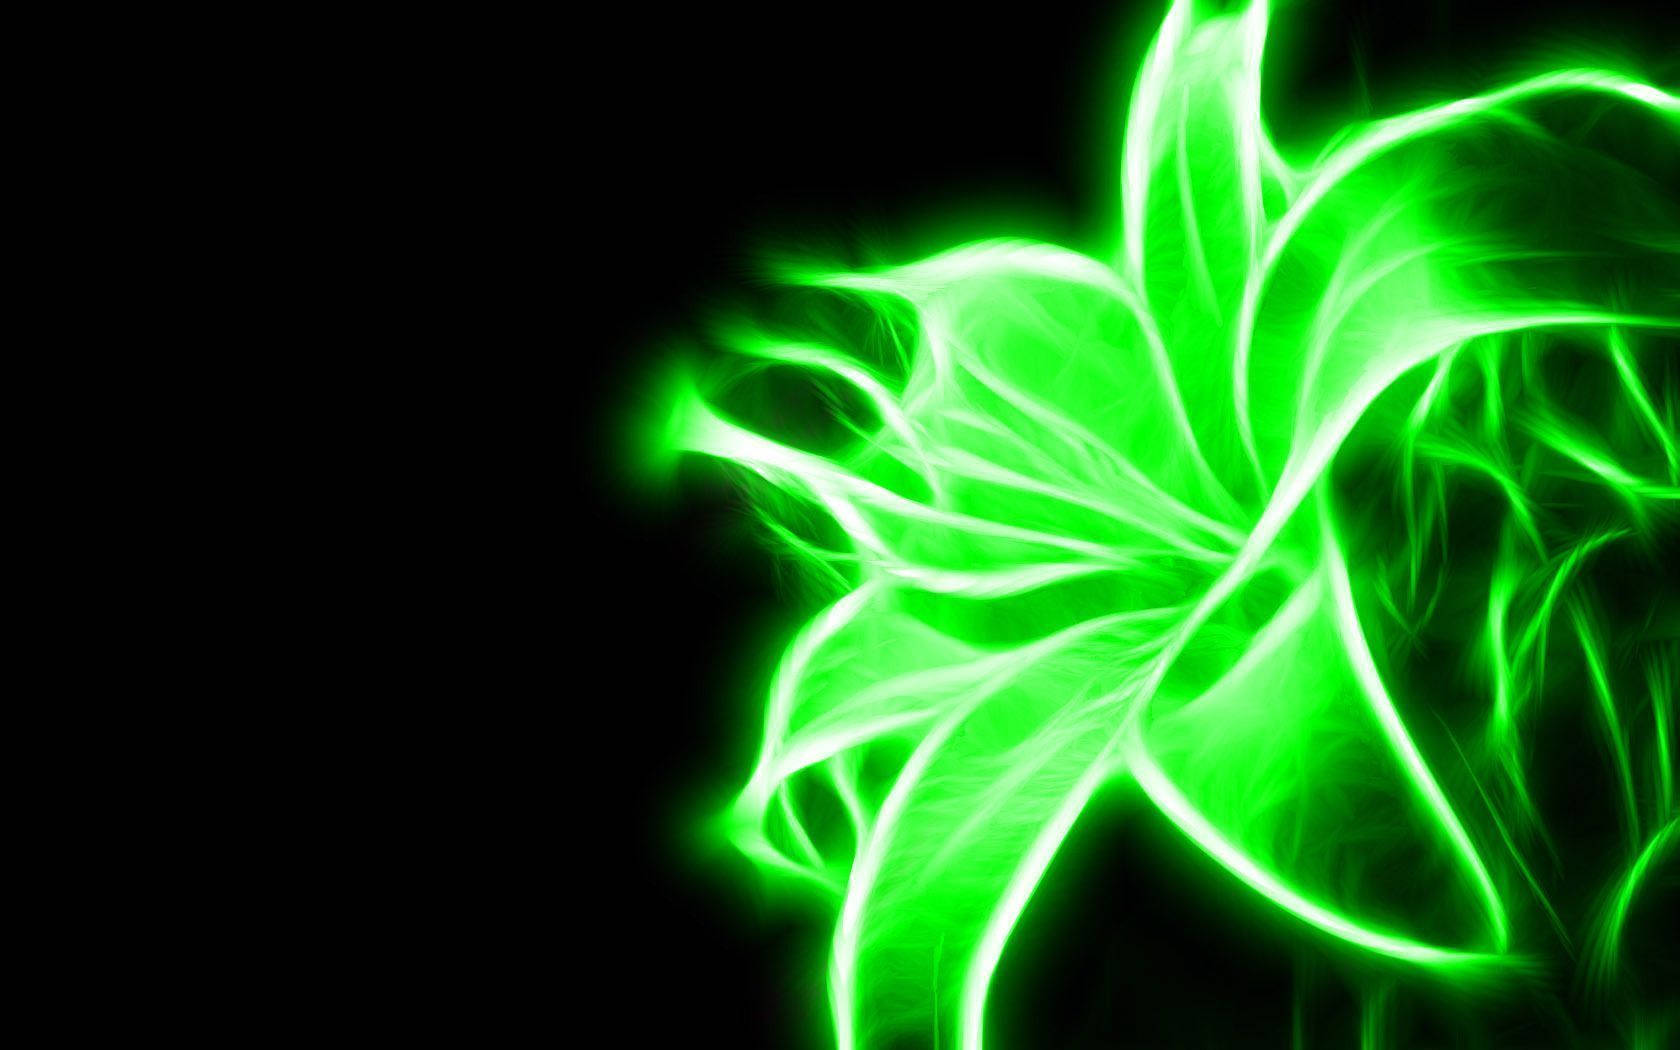 Flower-shaped Green Fire